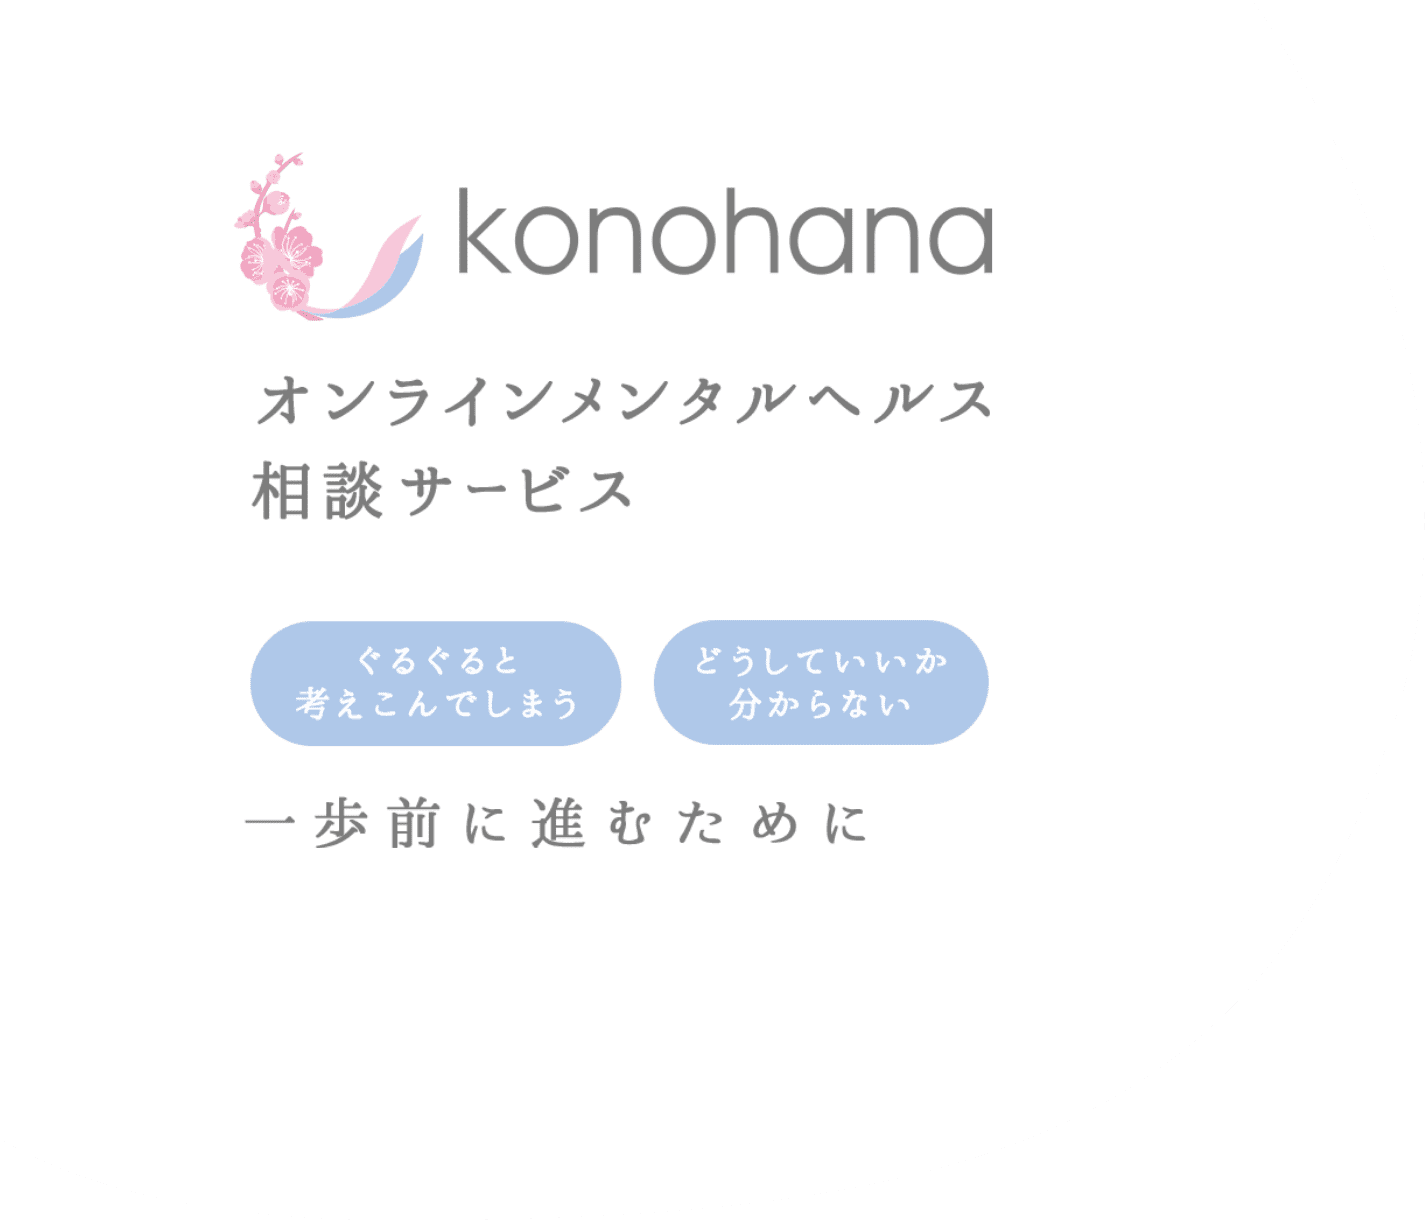 konohana オンラインメンタルヘルス相談サービス 一歩前に進むために